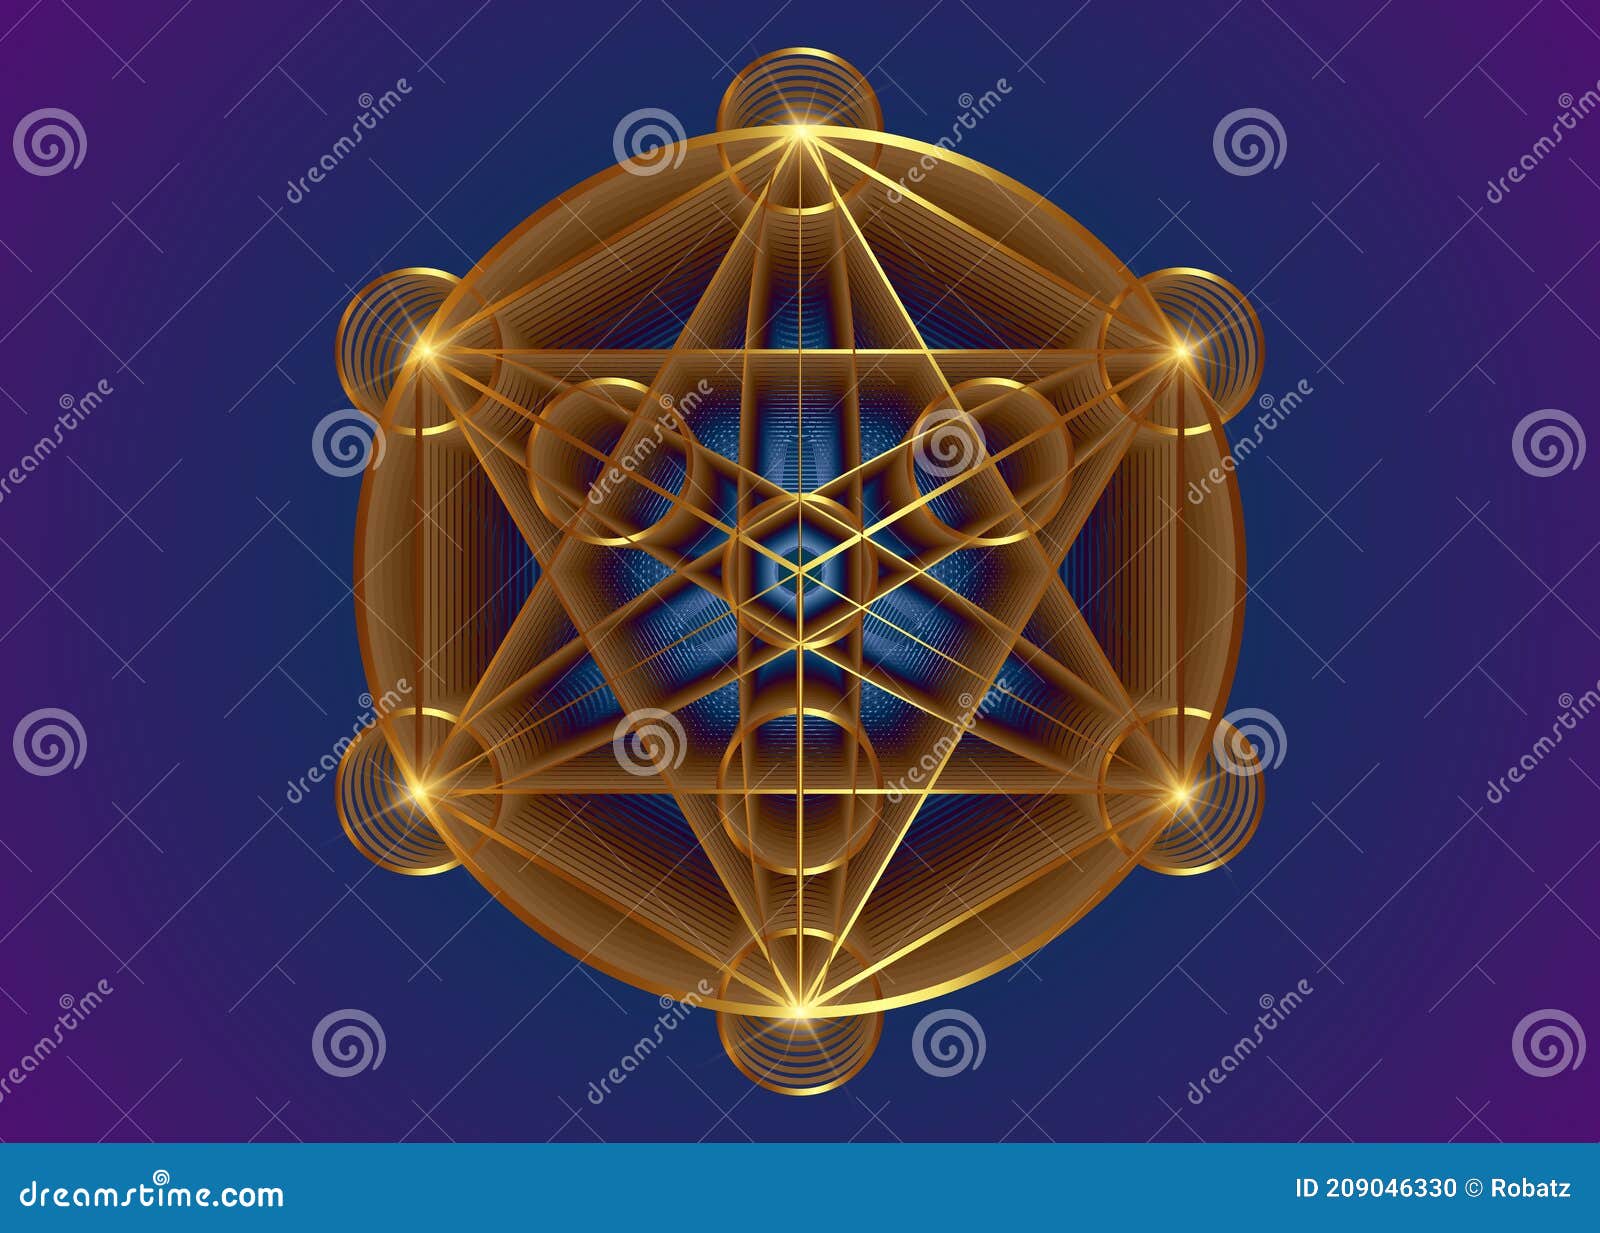 alchemy occult mandala metatrons cube flower of life. gold sacred geometry graphic  magic hexagram.  mystic sign